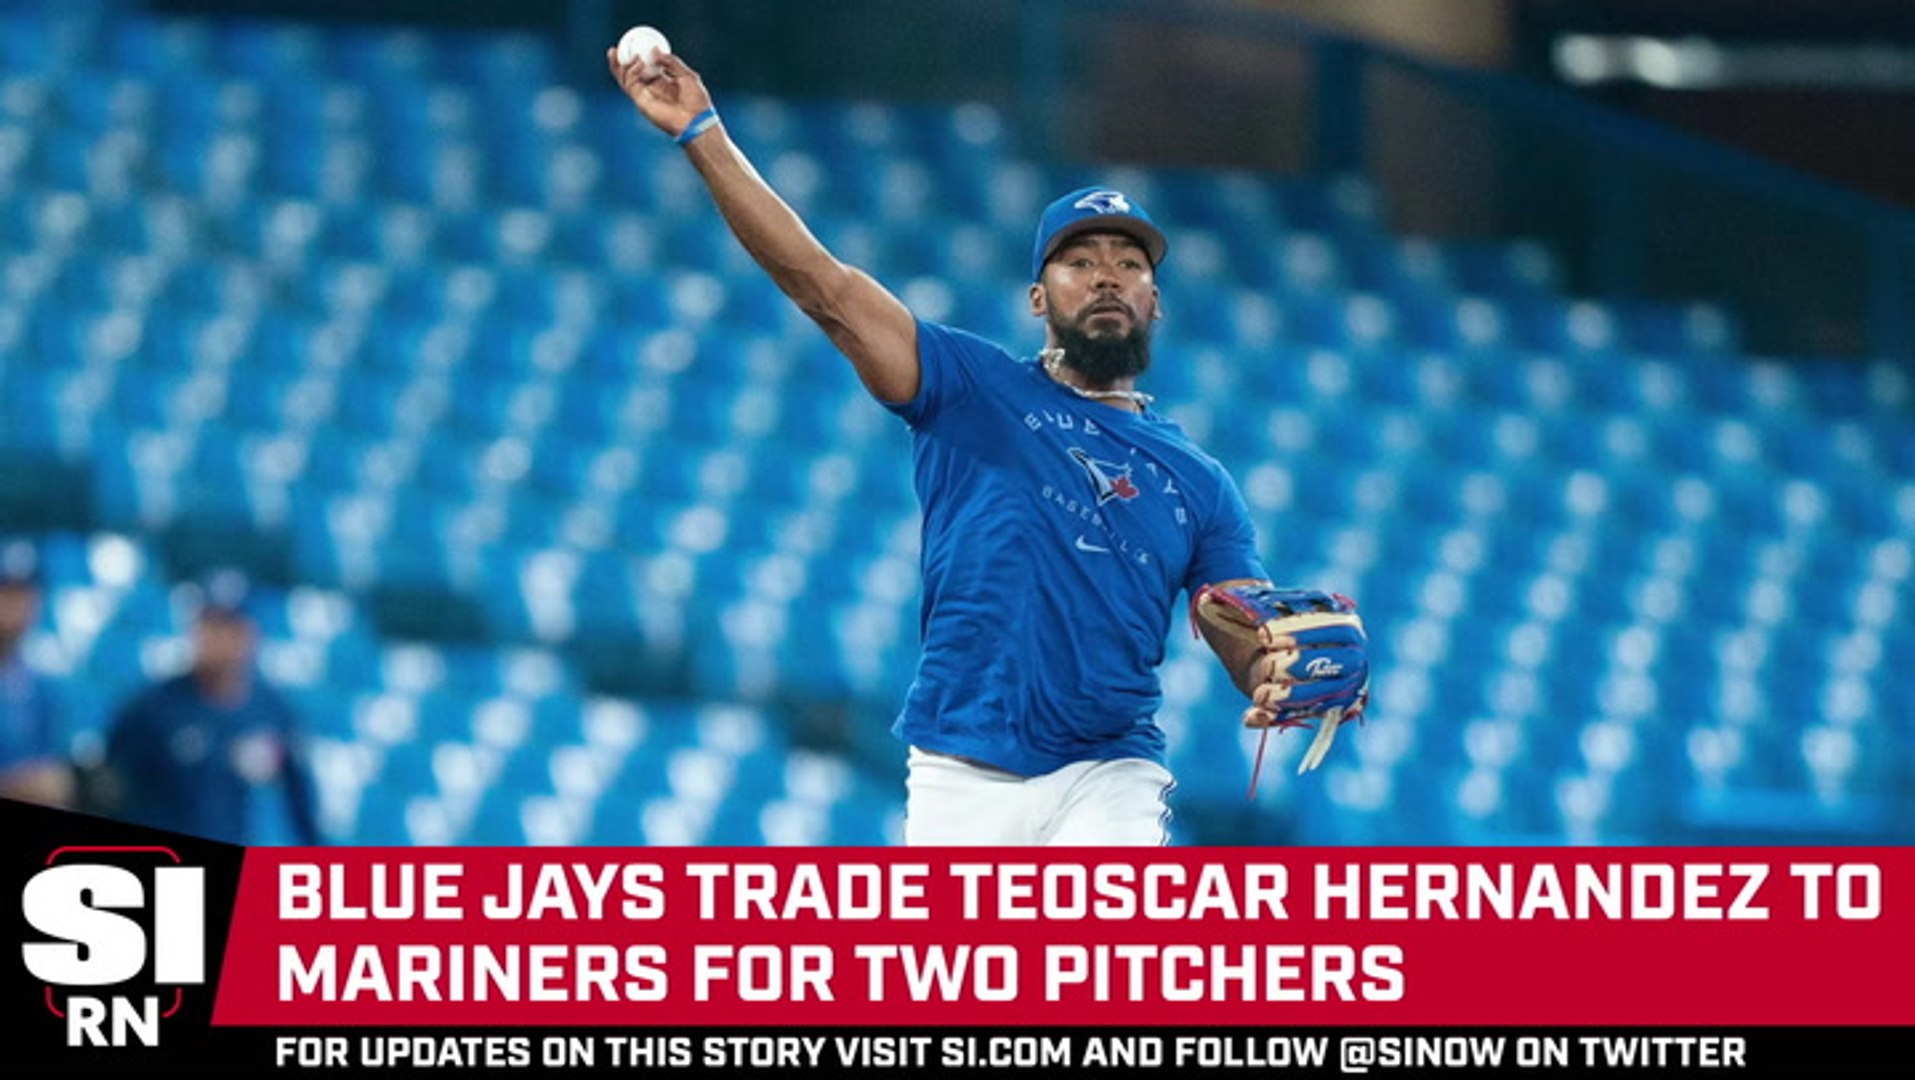 Teoscar Hernandez trade: Blue Jays get pitchers Swanson, Macko